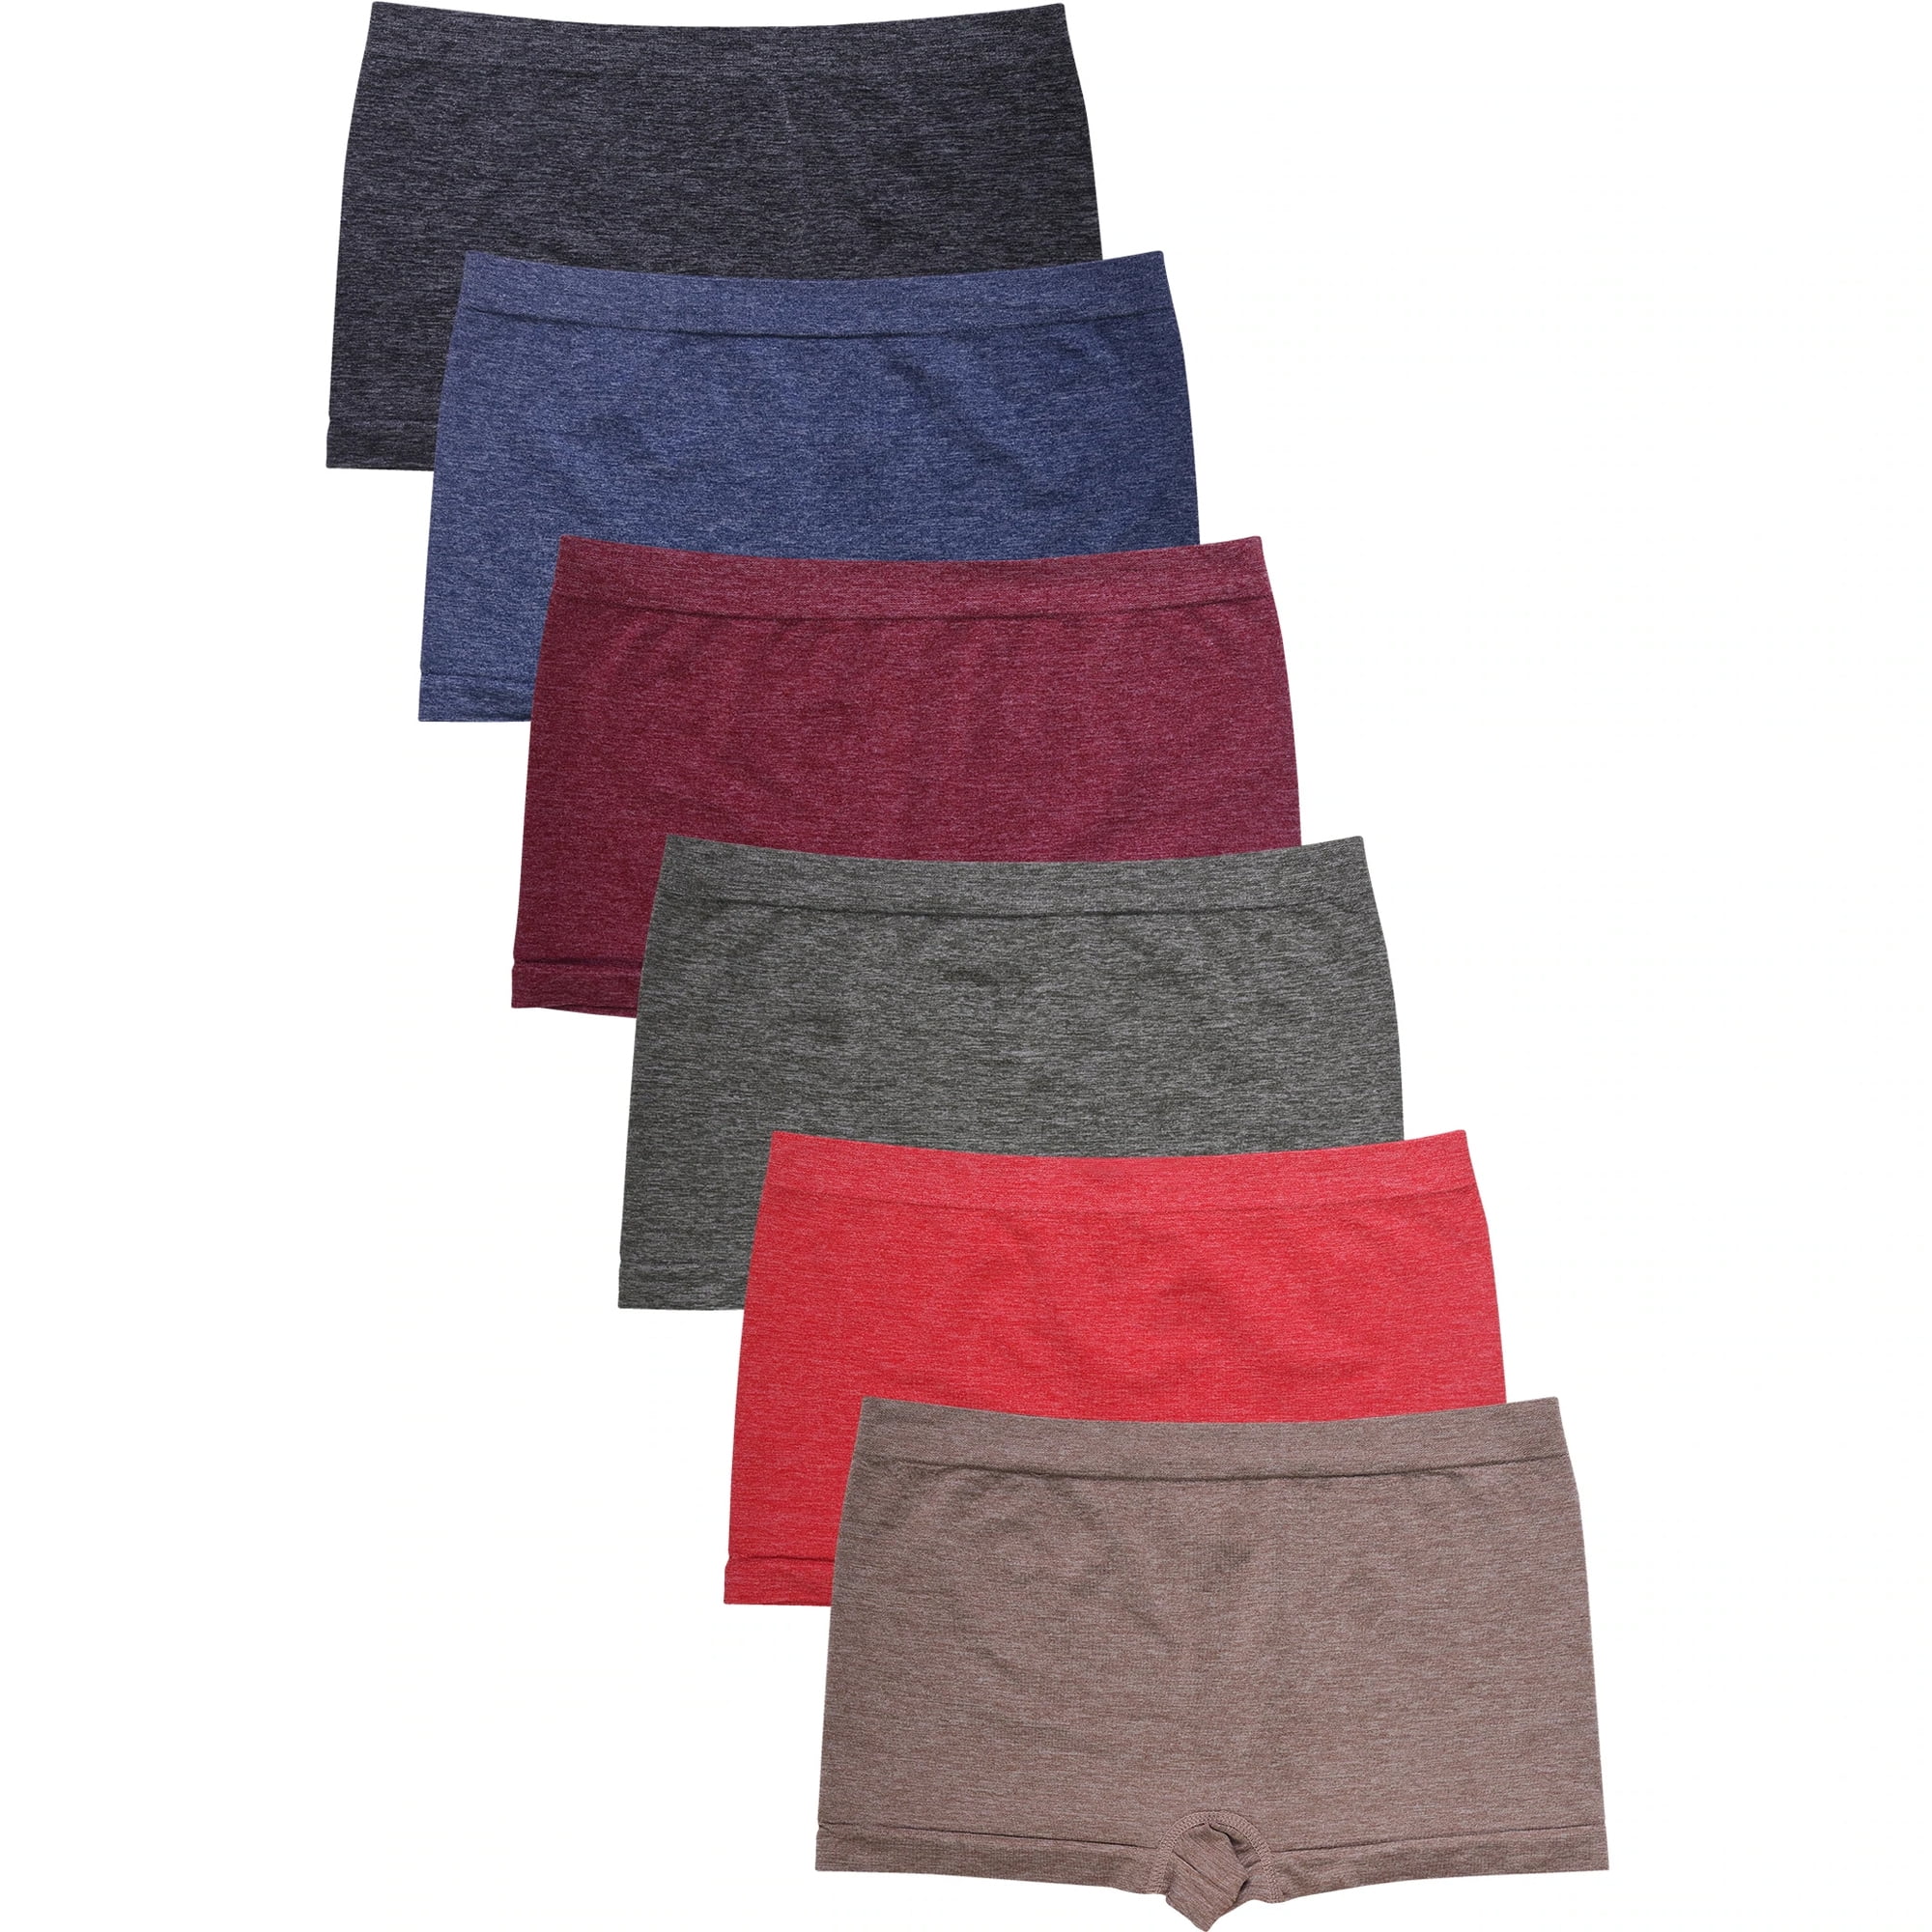 Women's Boyshorts Panties Seamless Underwear Stretch Light Weight Essential  Boxer Brief Panty 5 Pack - 5pack (grass Green,blue,light Coffee,orange,bla